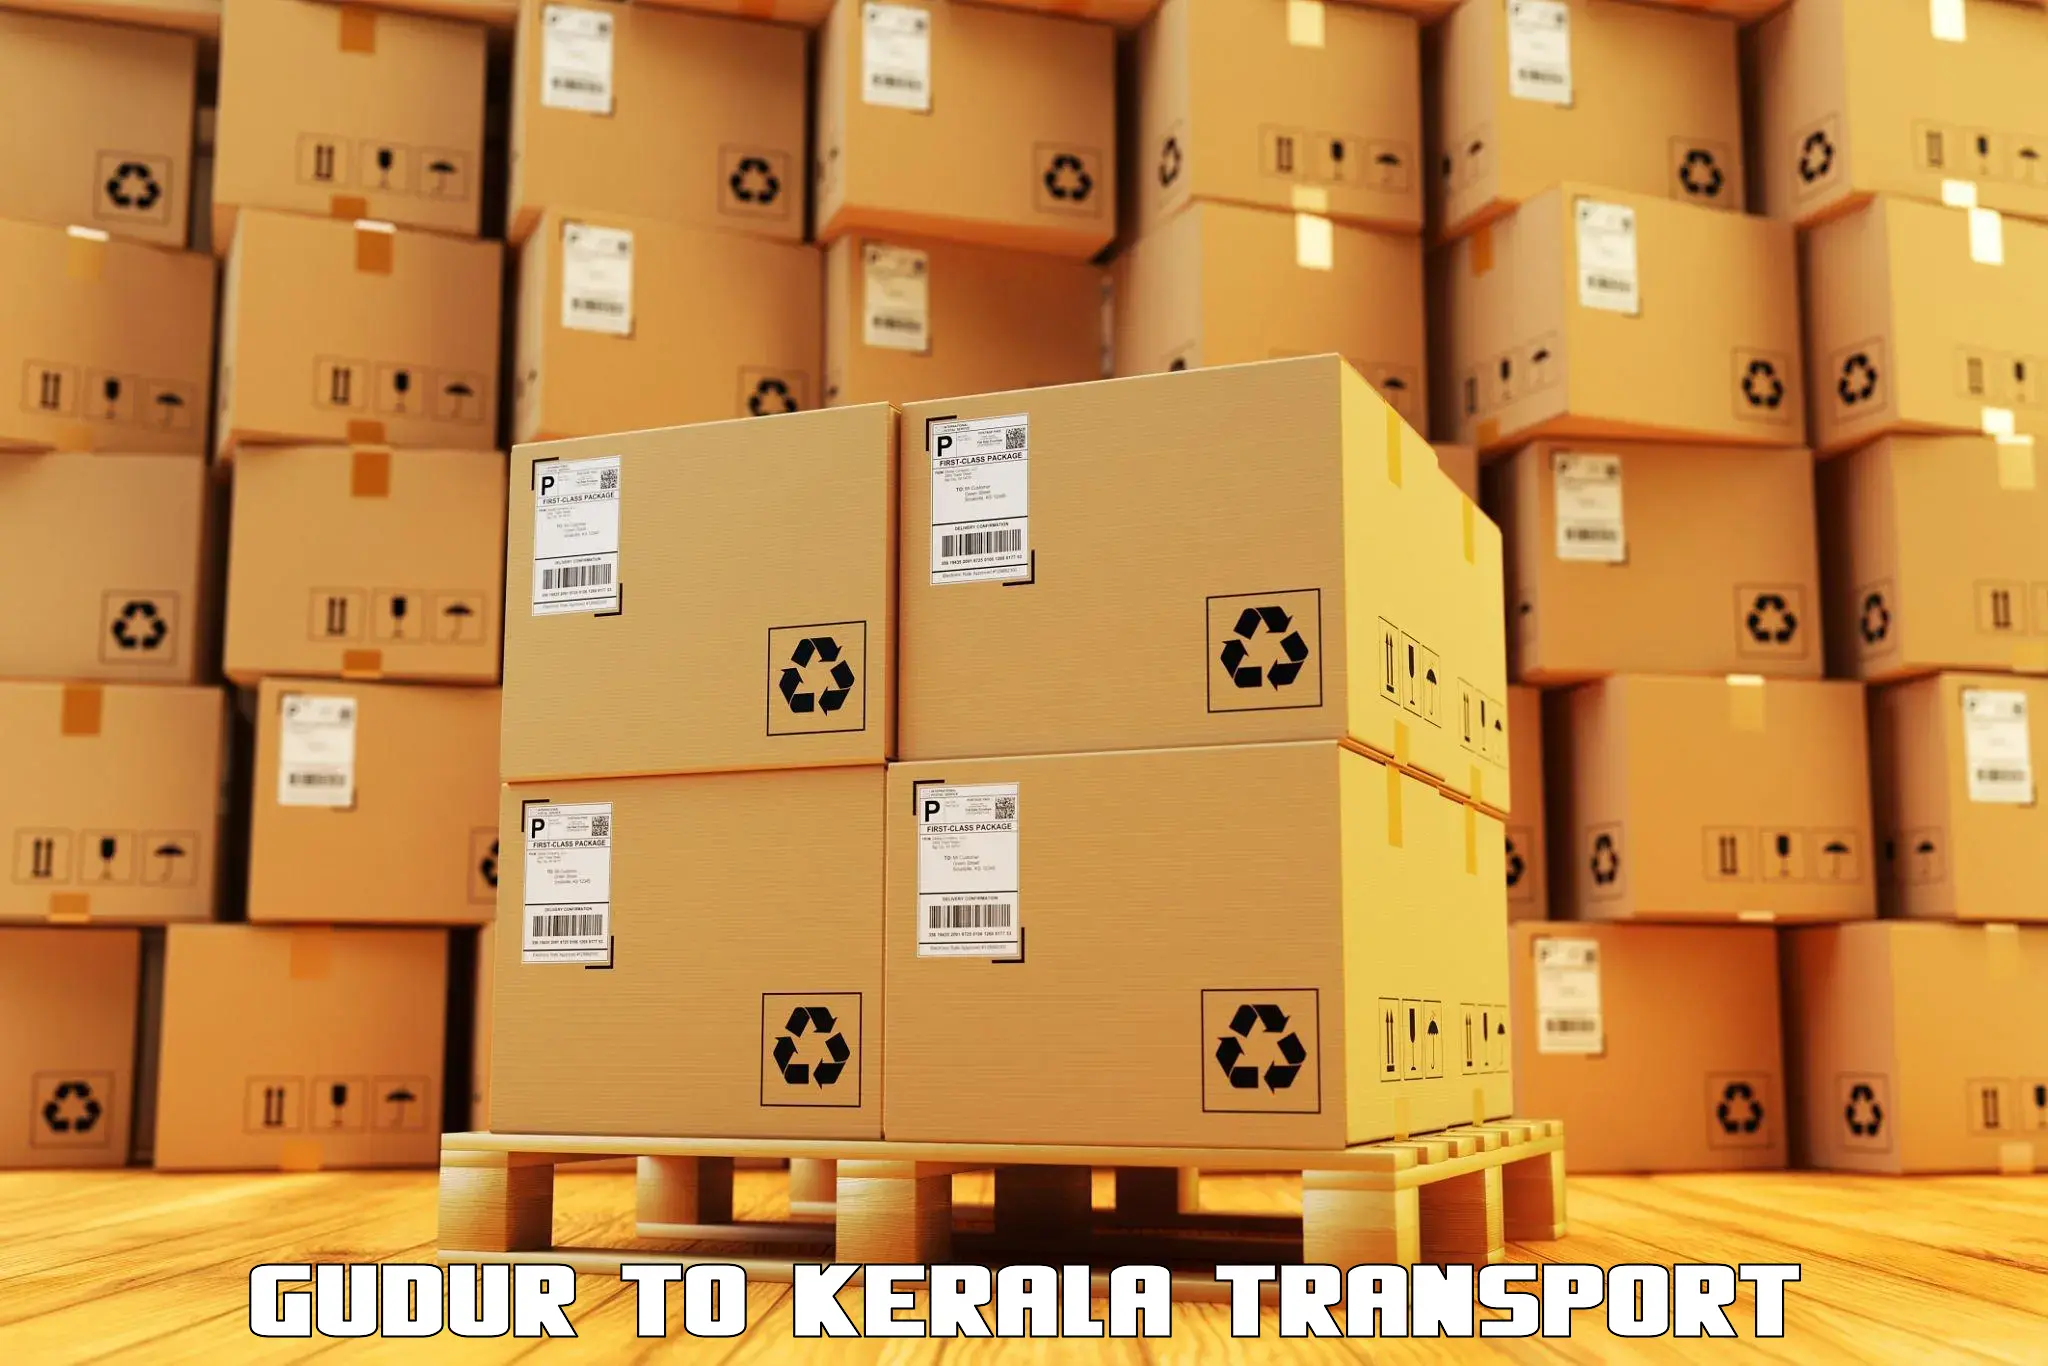 Truck transport companies in India Gudur to Manjeshwar